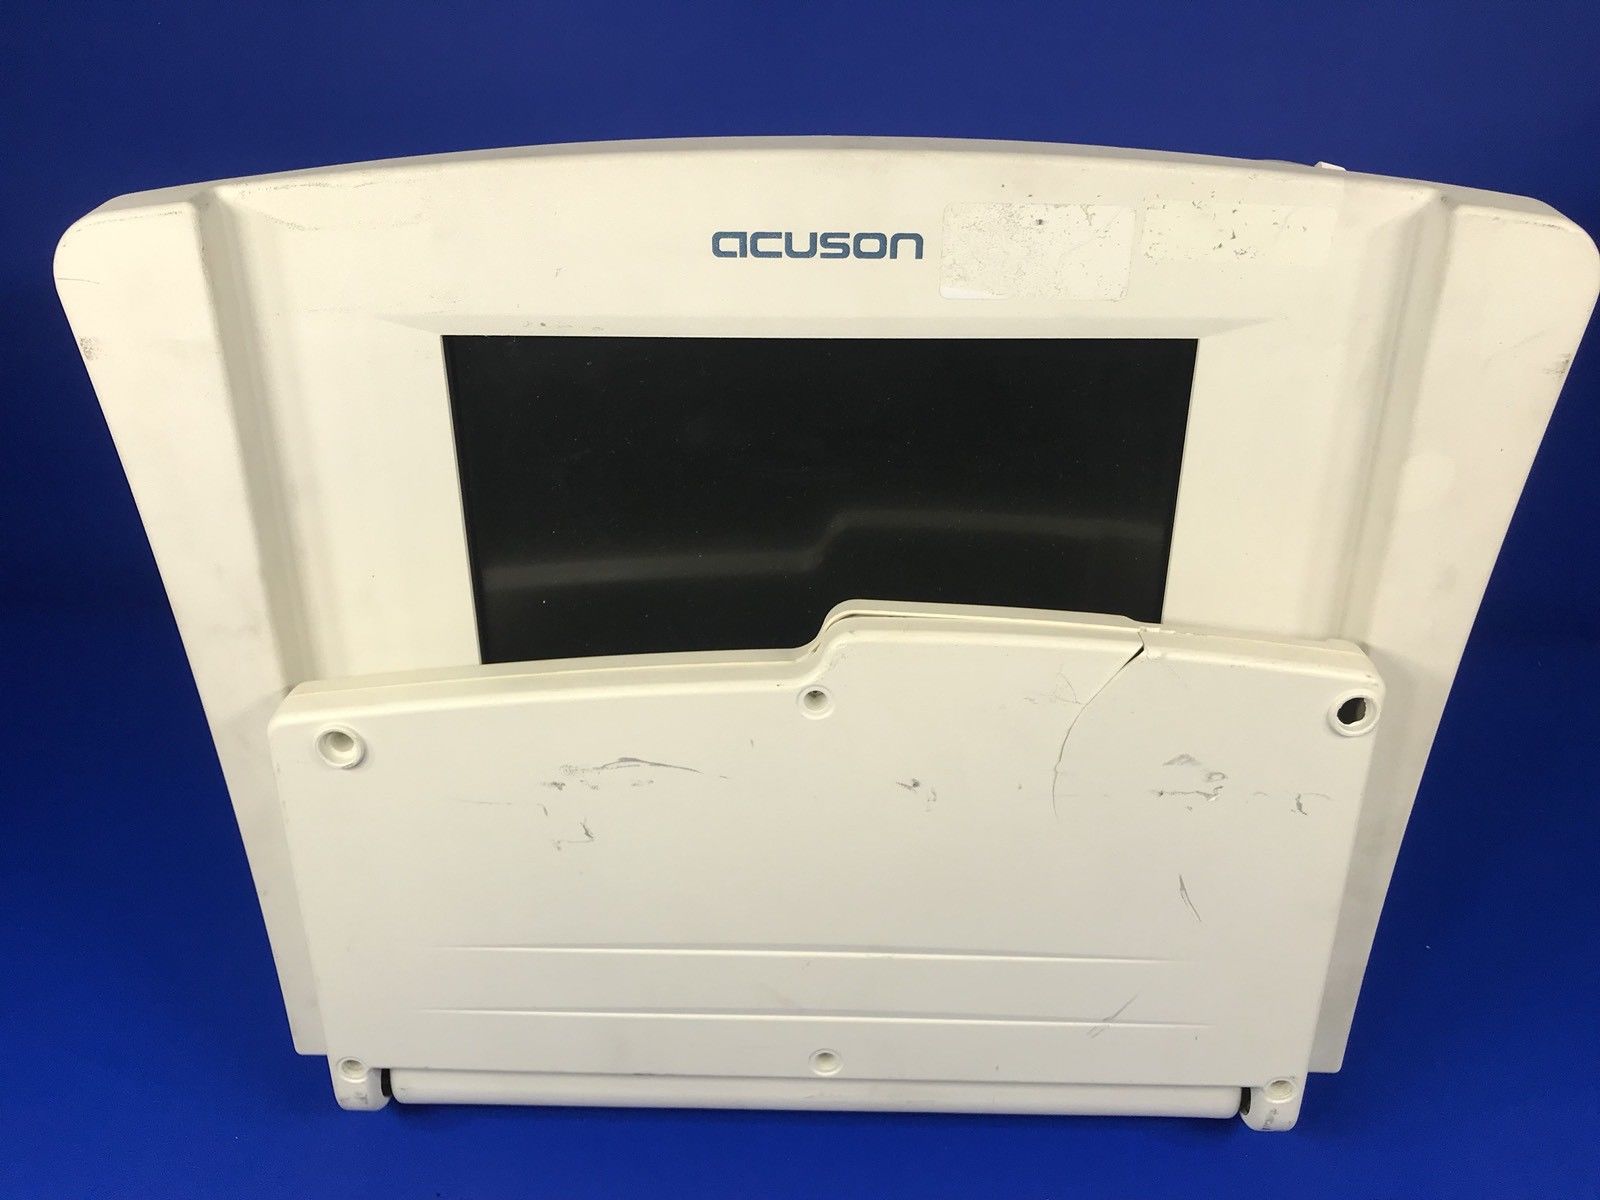 SIEMENS  Acuson Cypress Ultrasound Machine DIAGNOSTIC ULTRASOUND MACHINES FOR SALE